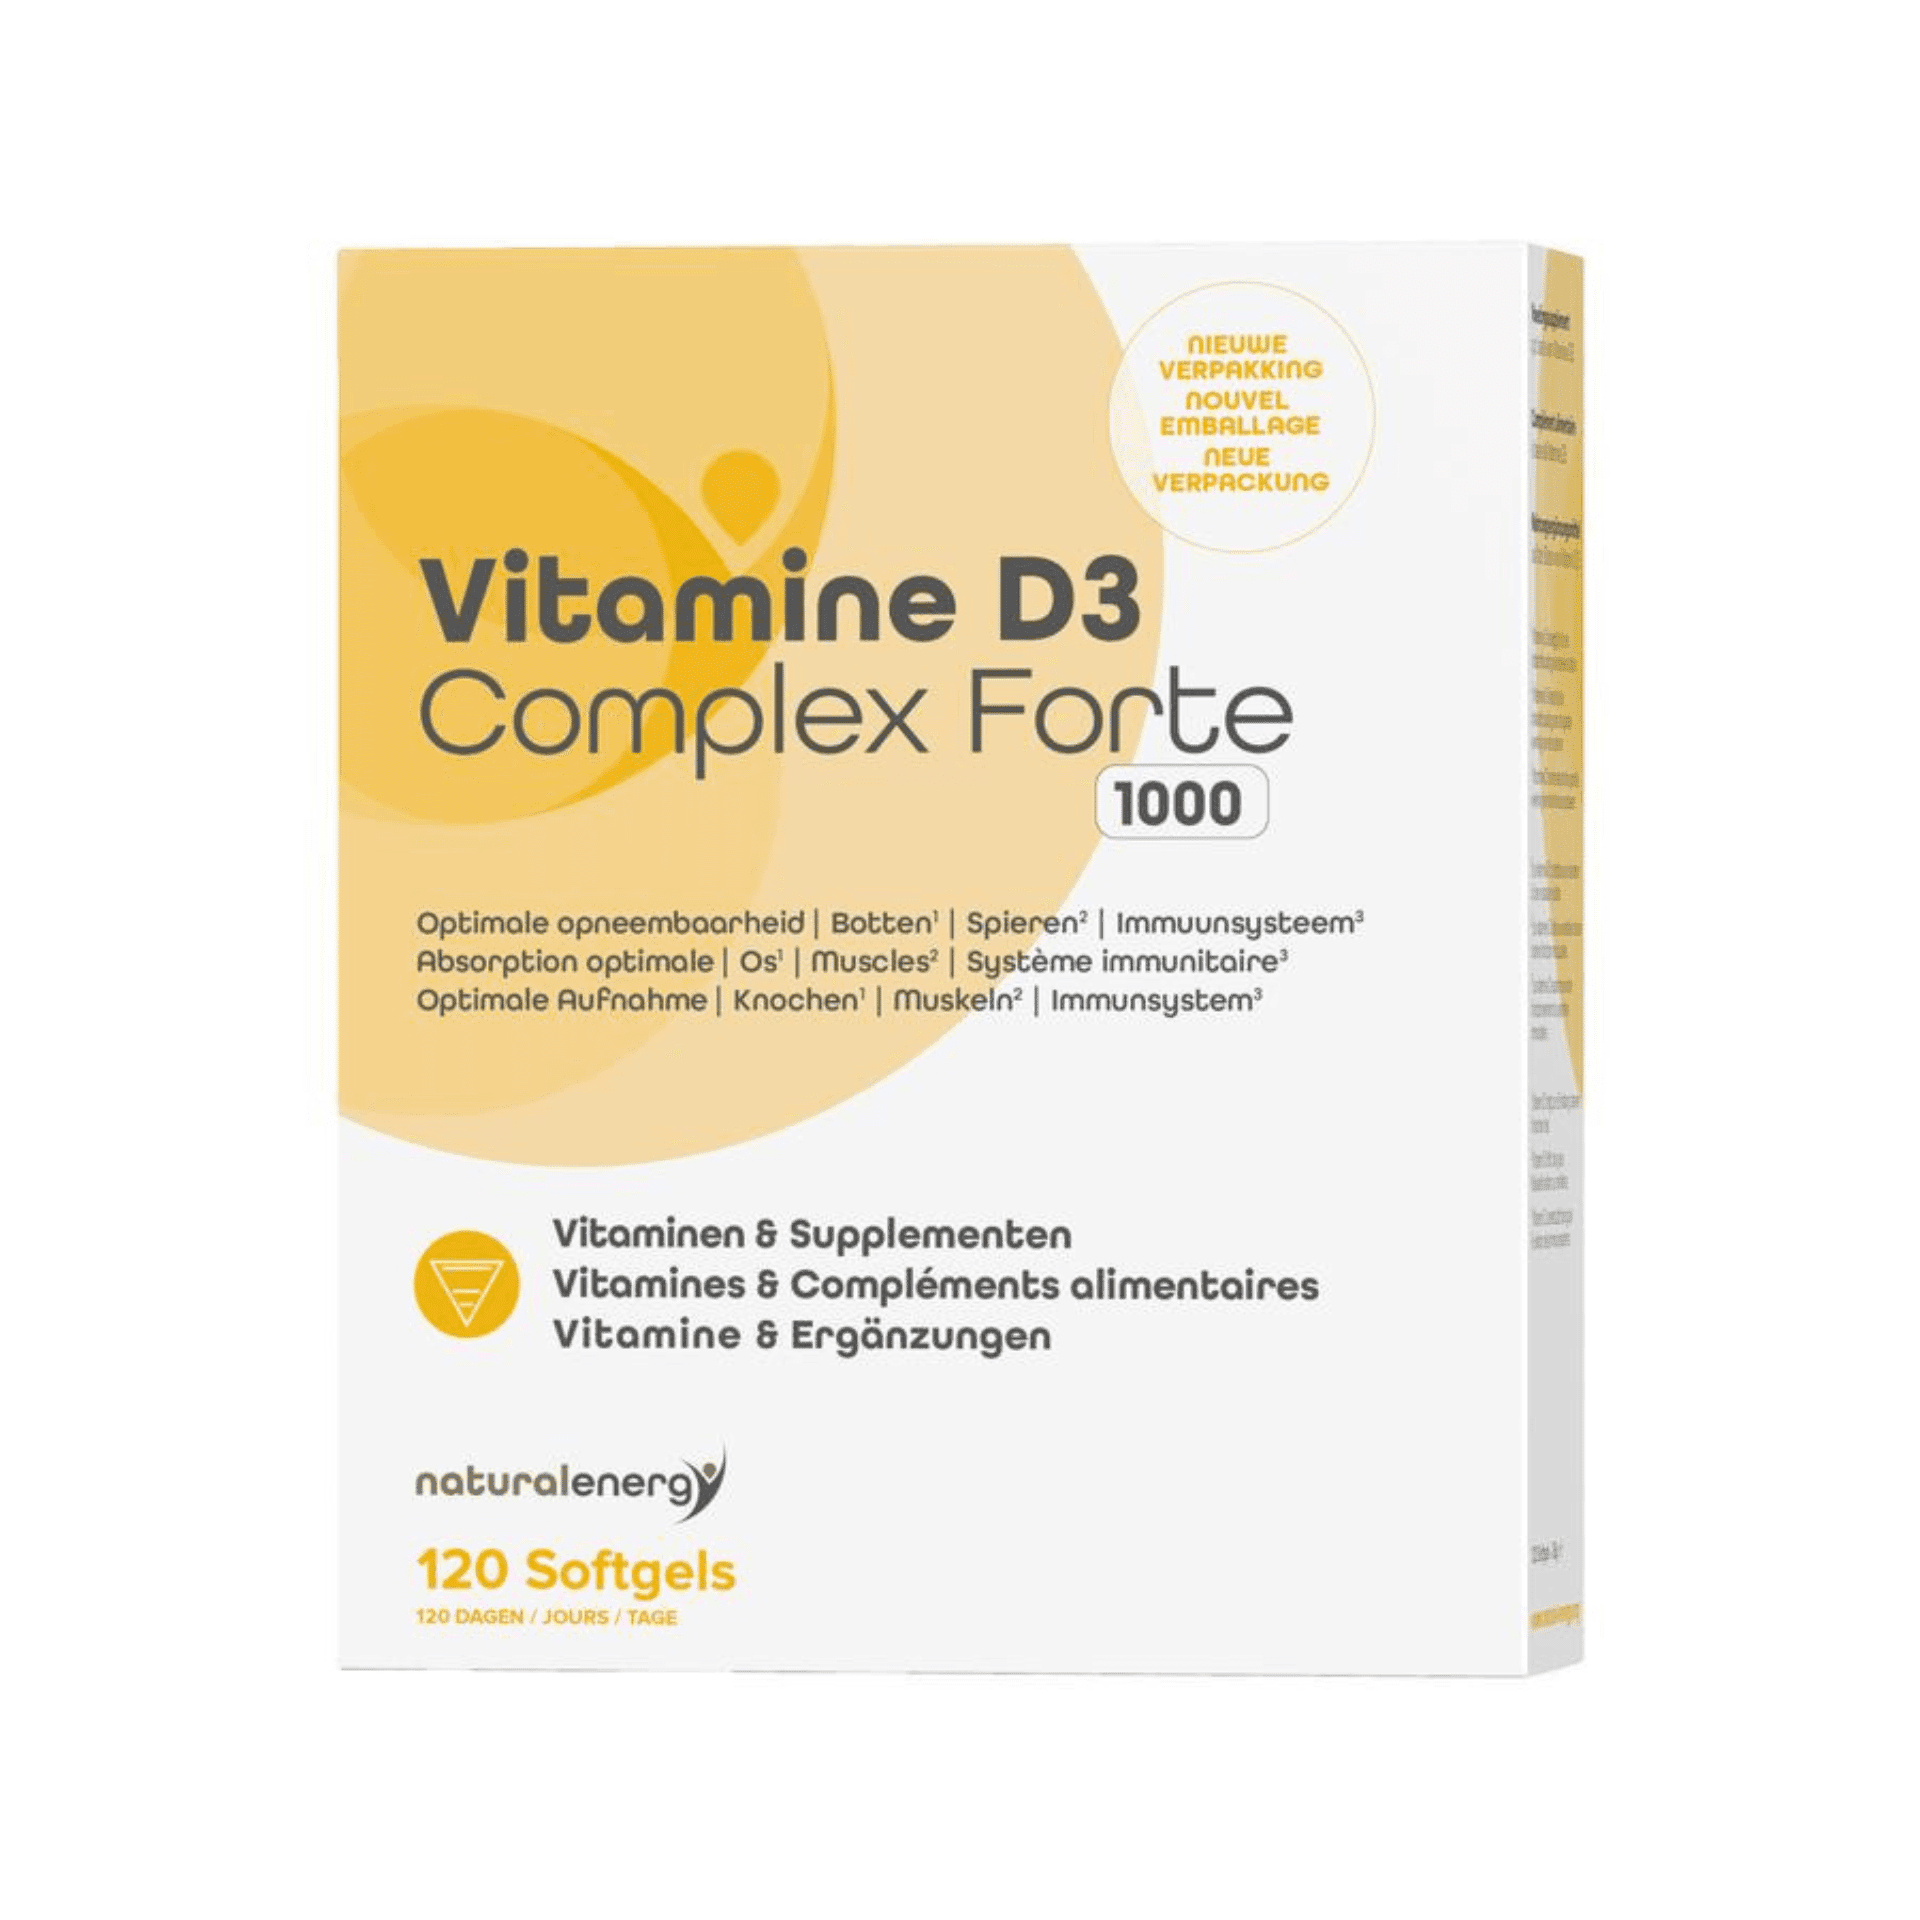 Natural Energy Vitamine D3 Complex Forte 1000